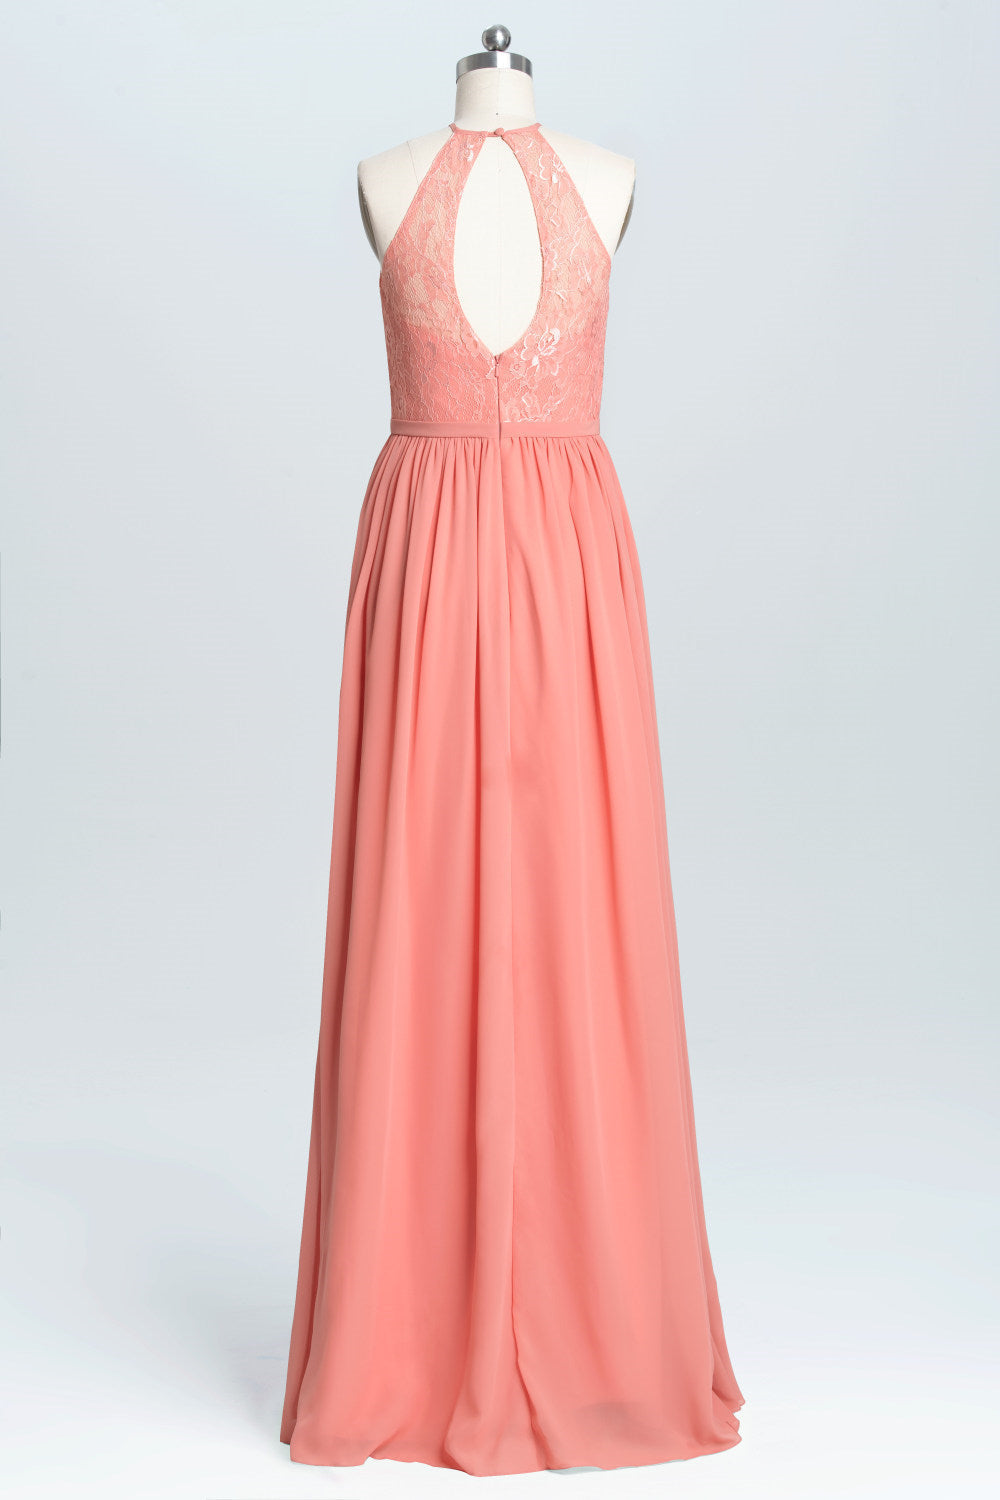 Design Dress, Halter Coral A-line Lace and Chiffon Long Bridesmaid Dress